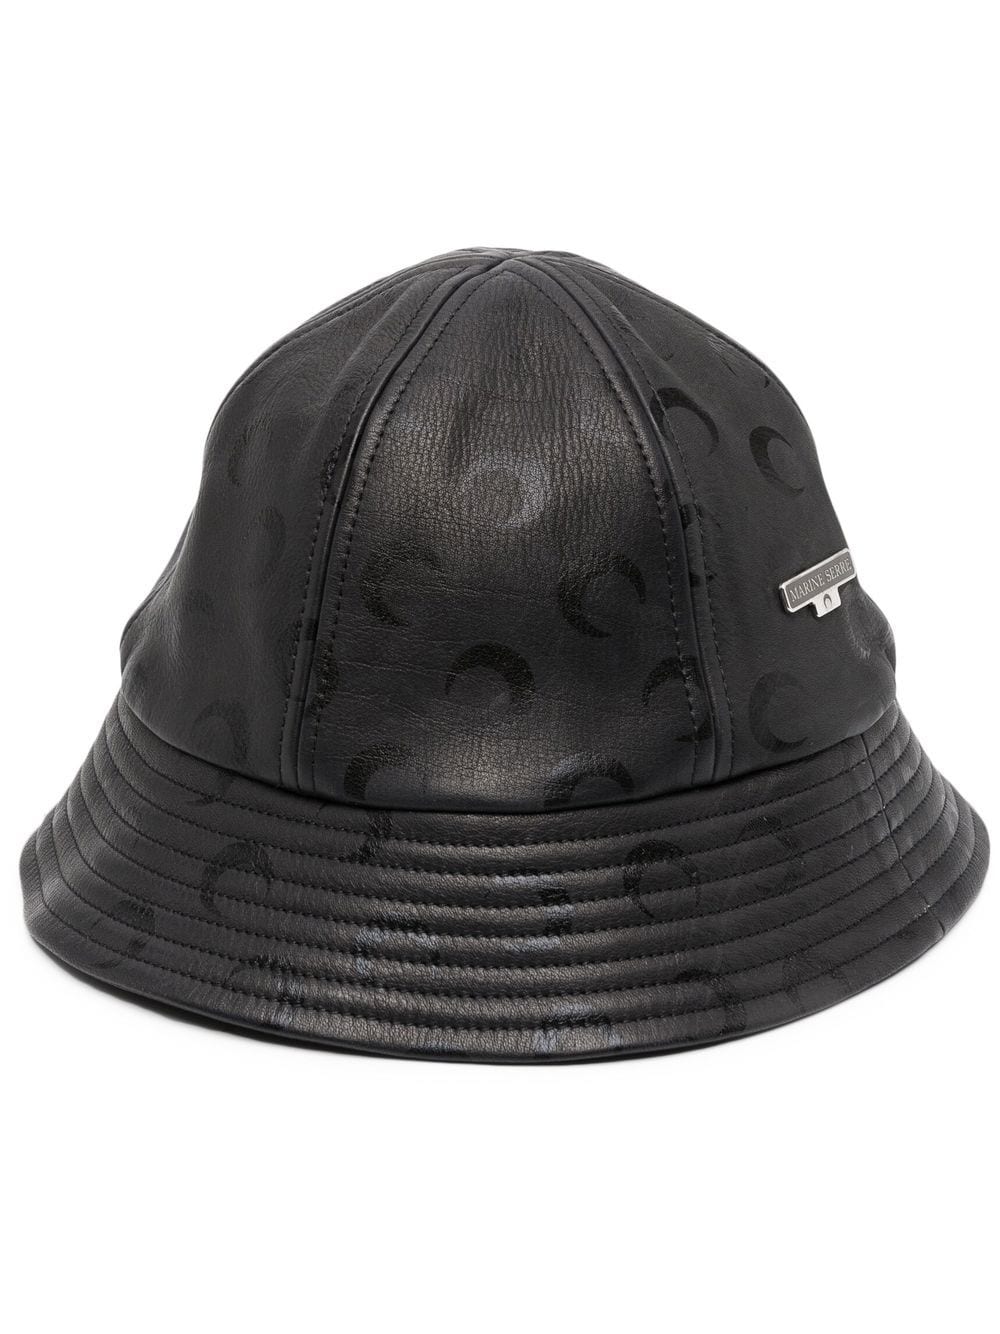 Marine Serre Crescent Moon-print Leather Bucket Hat - Farfetch